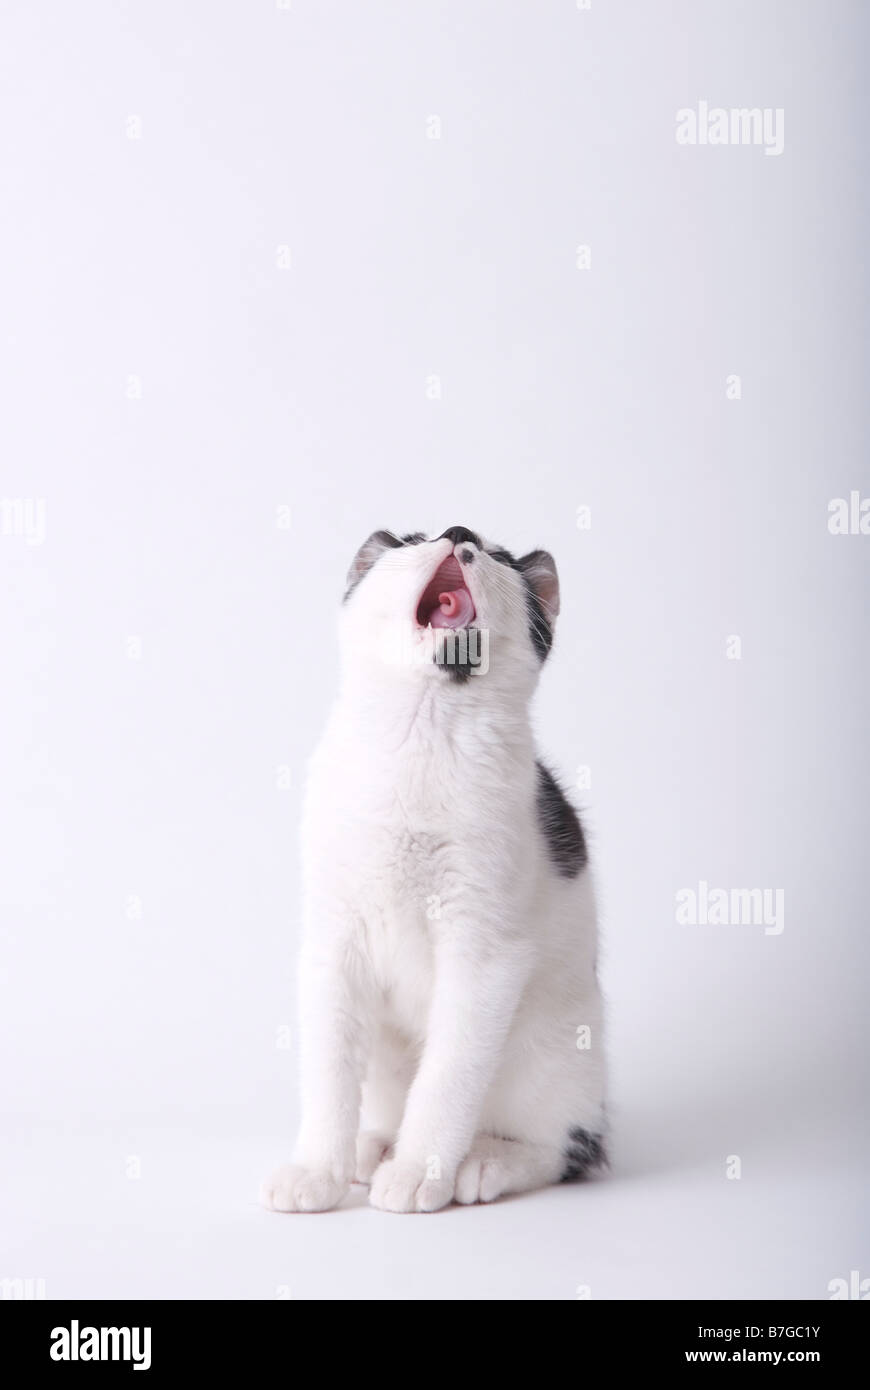 A black and white kitten yawning Stock Photo